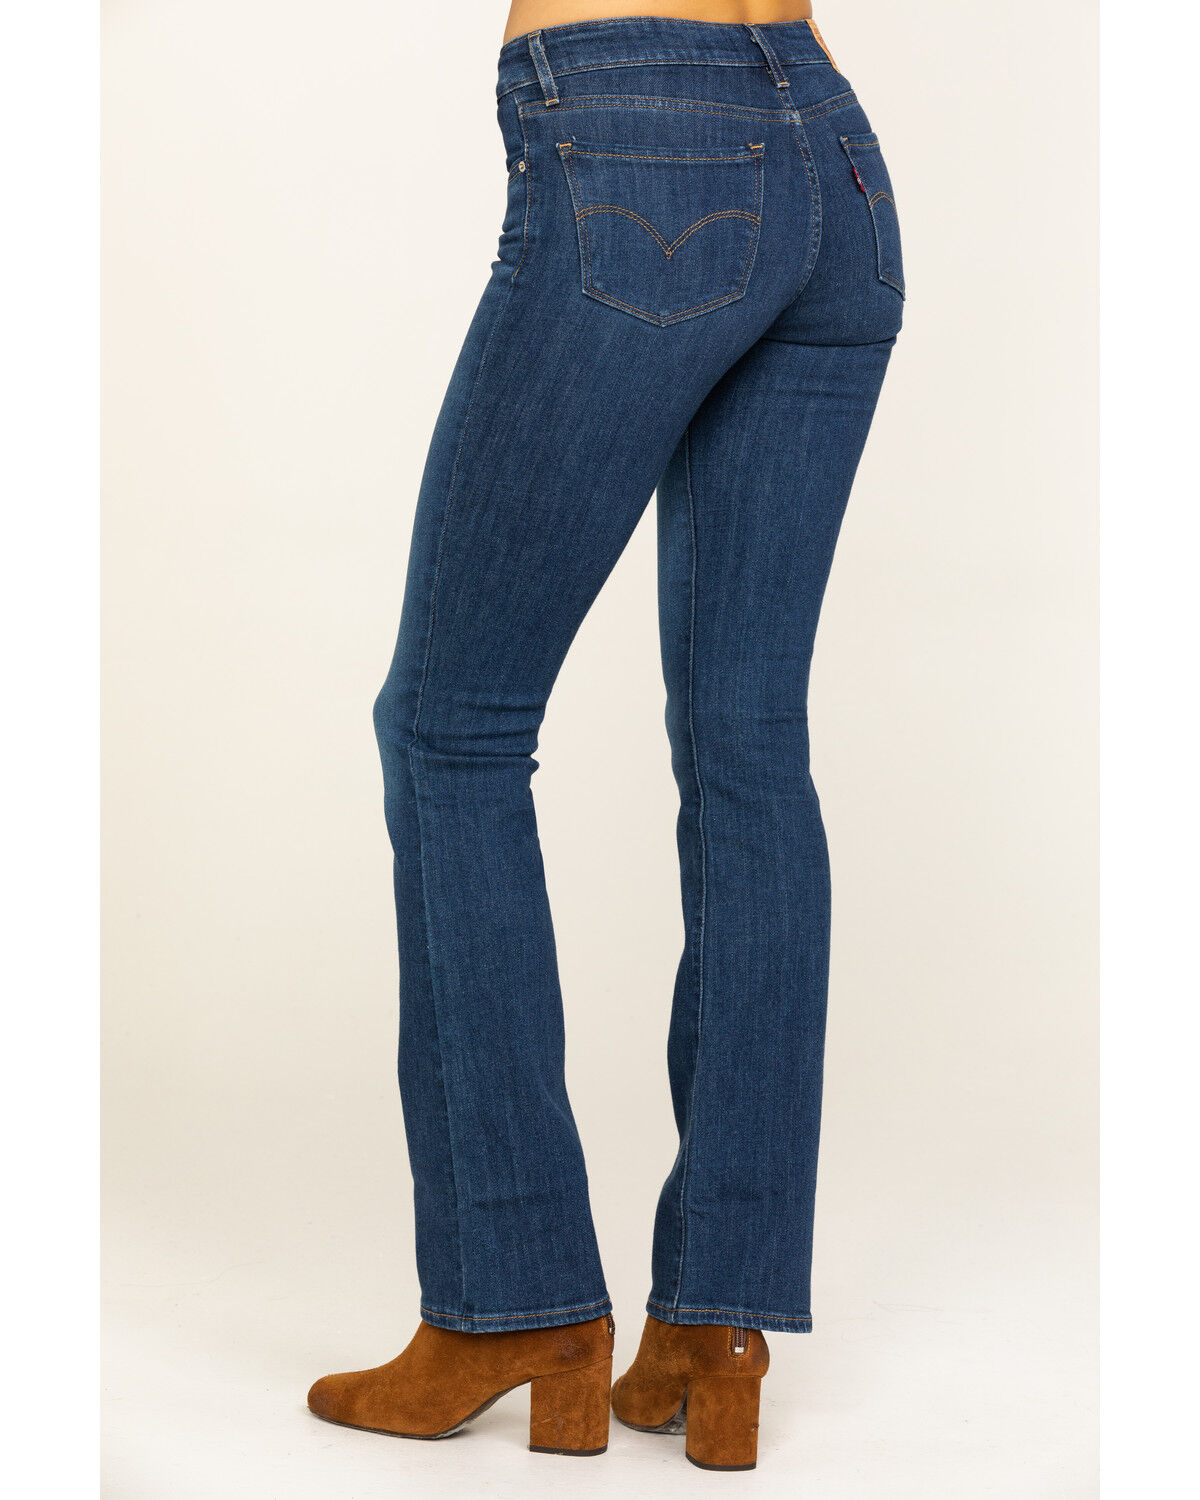 Levi's Women's 715 Bootcut Jeans 